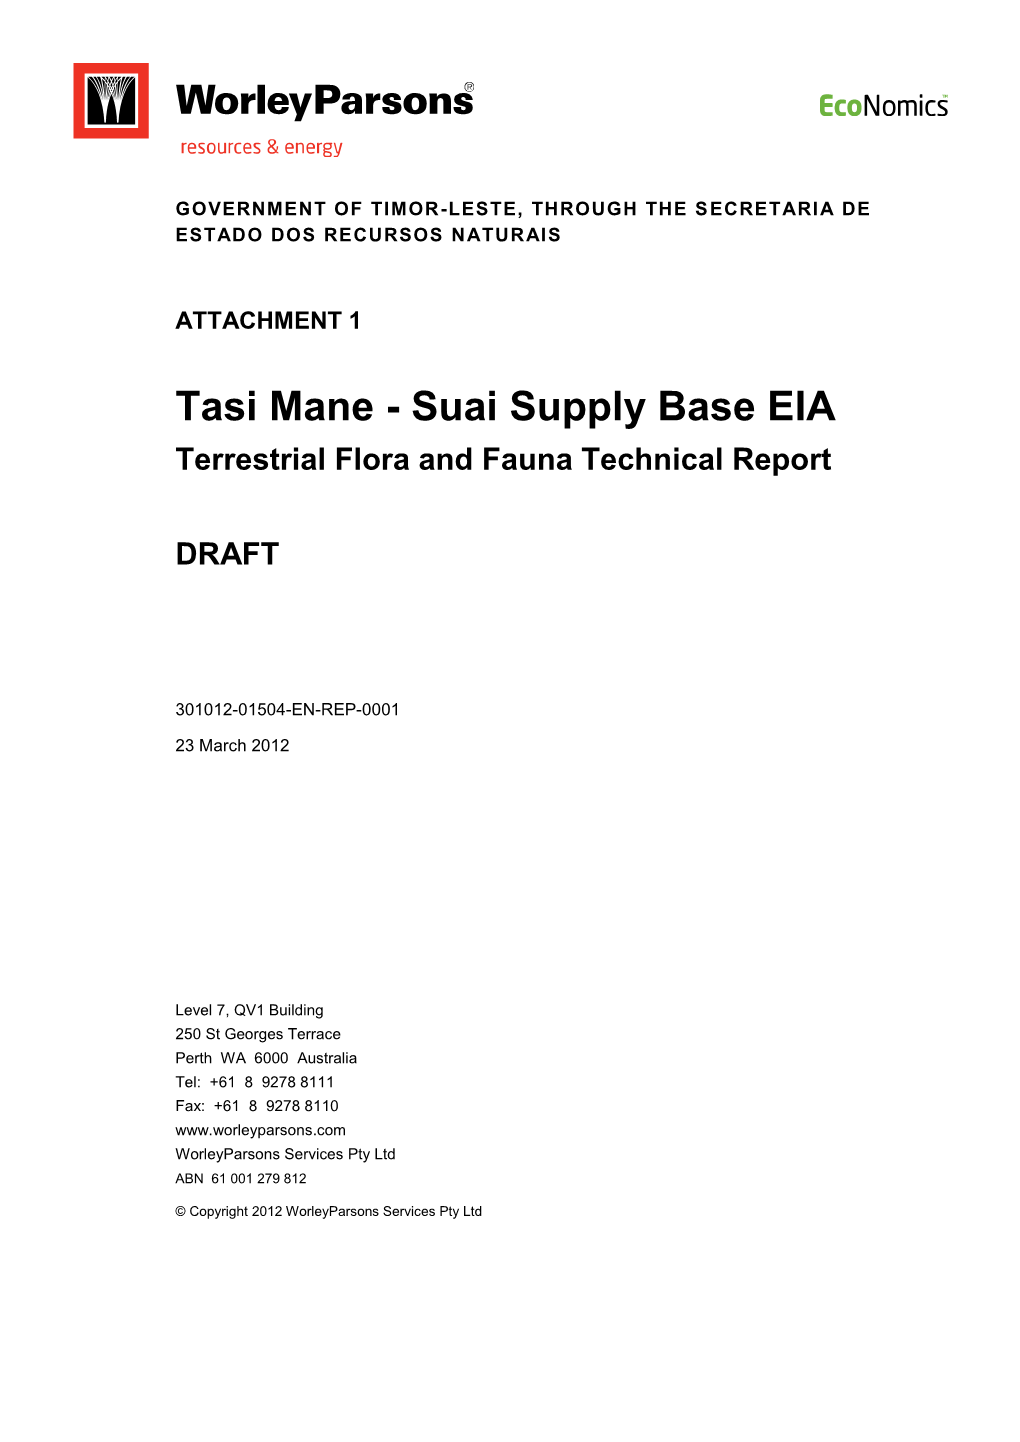 Tasi Mane - Suai Supply Base EIA Terrestrial Flora and Fauna Technical Report